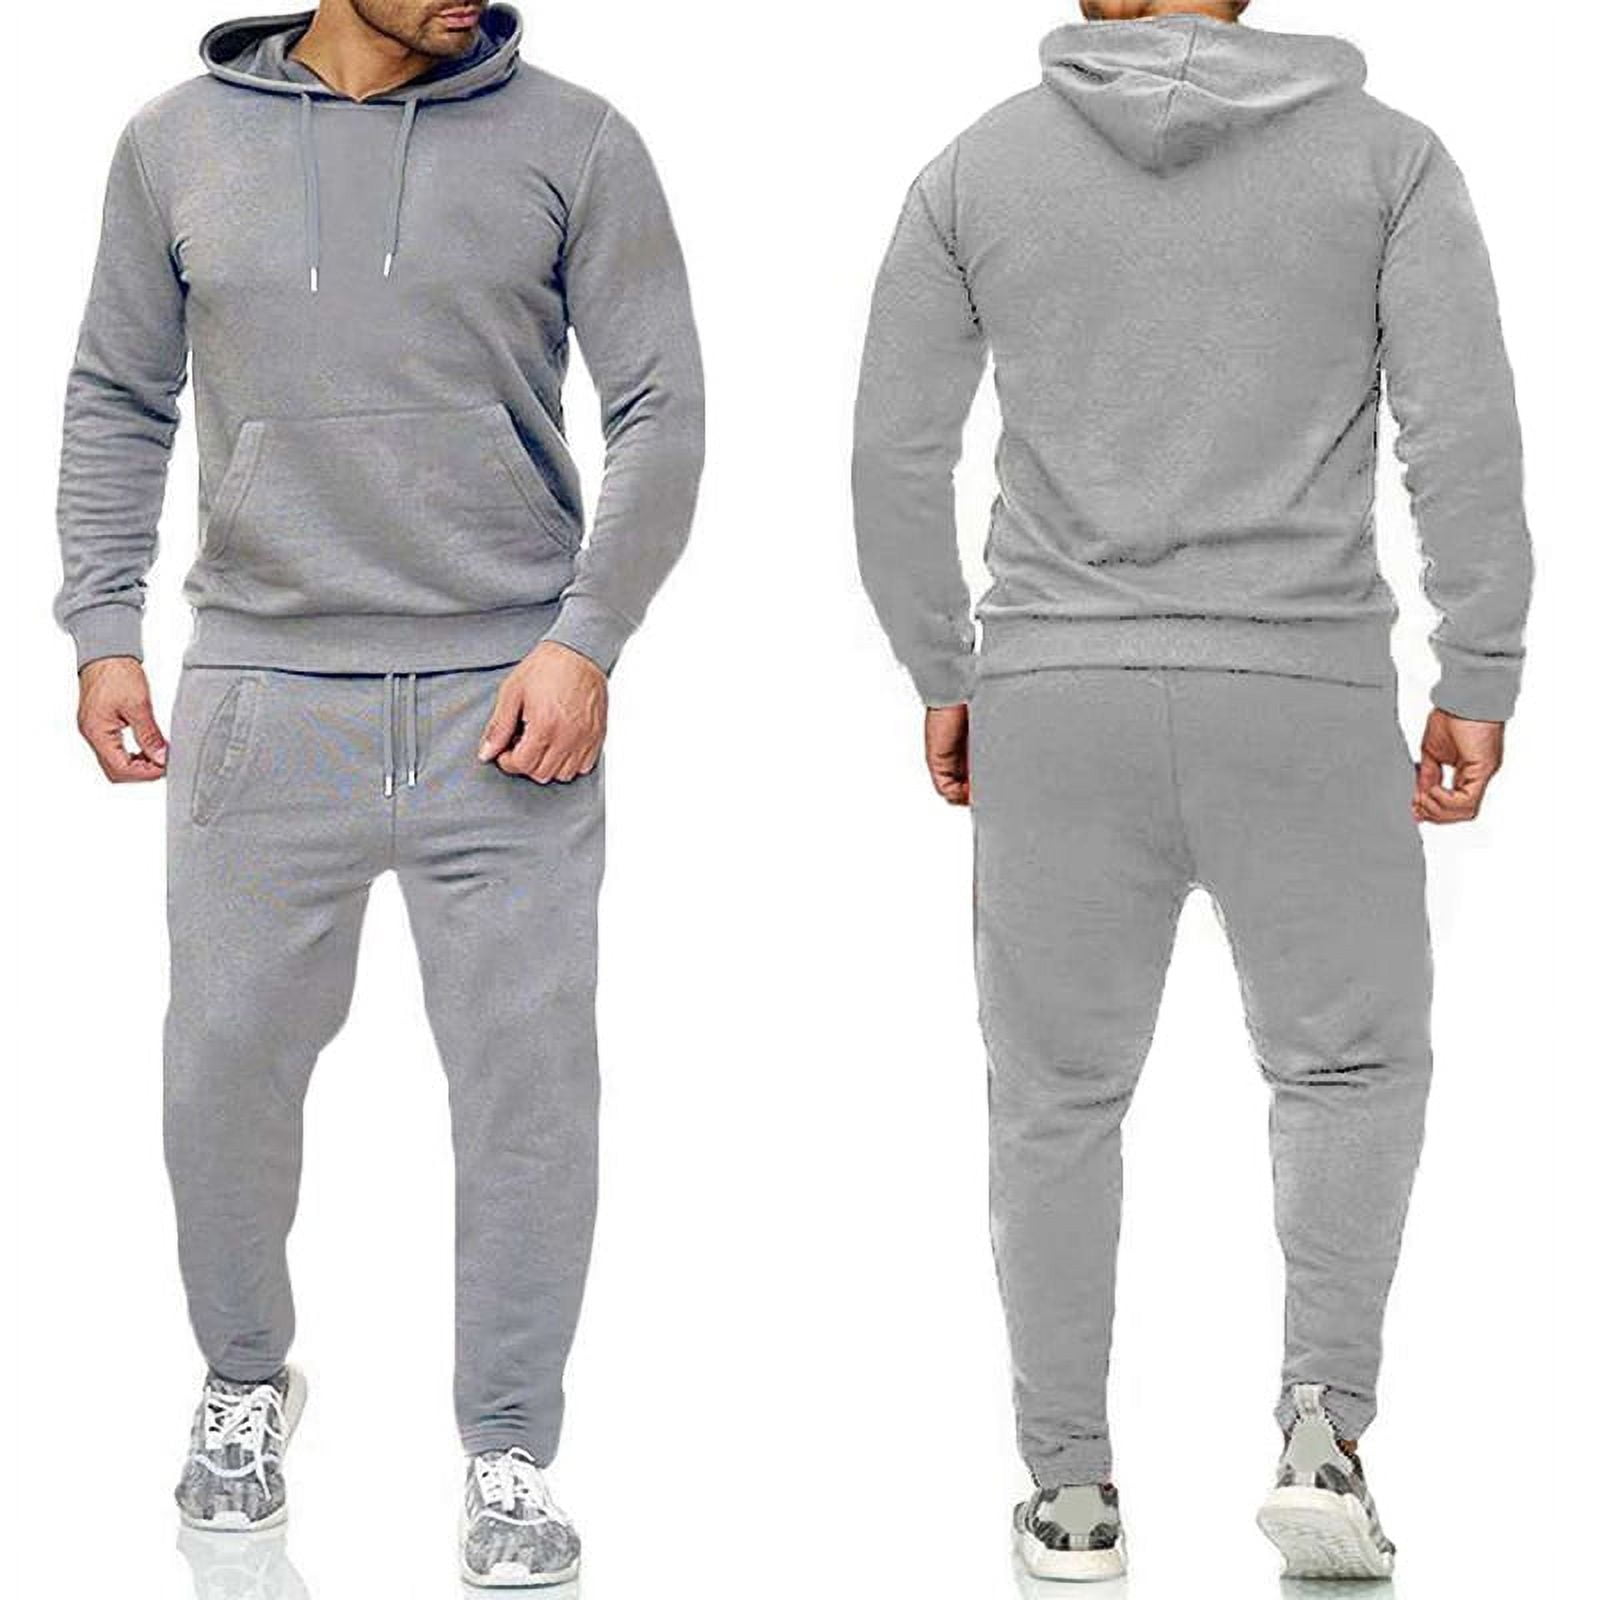 Buy Grey Track Pants for Men by VISIT WEAR Online